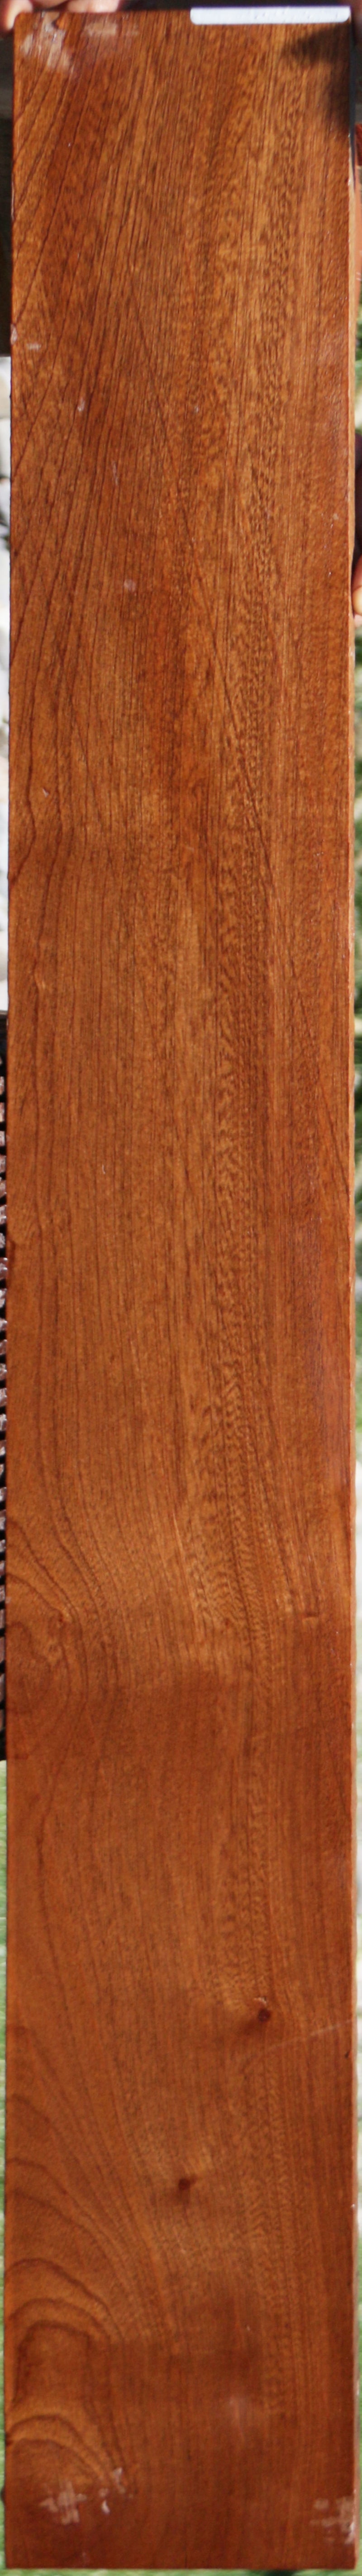 Santos Mahogany Micro Lumber